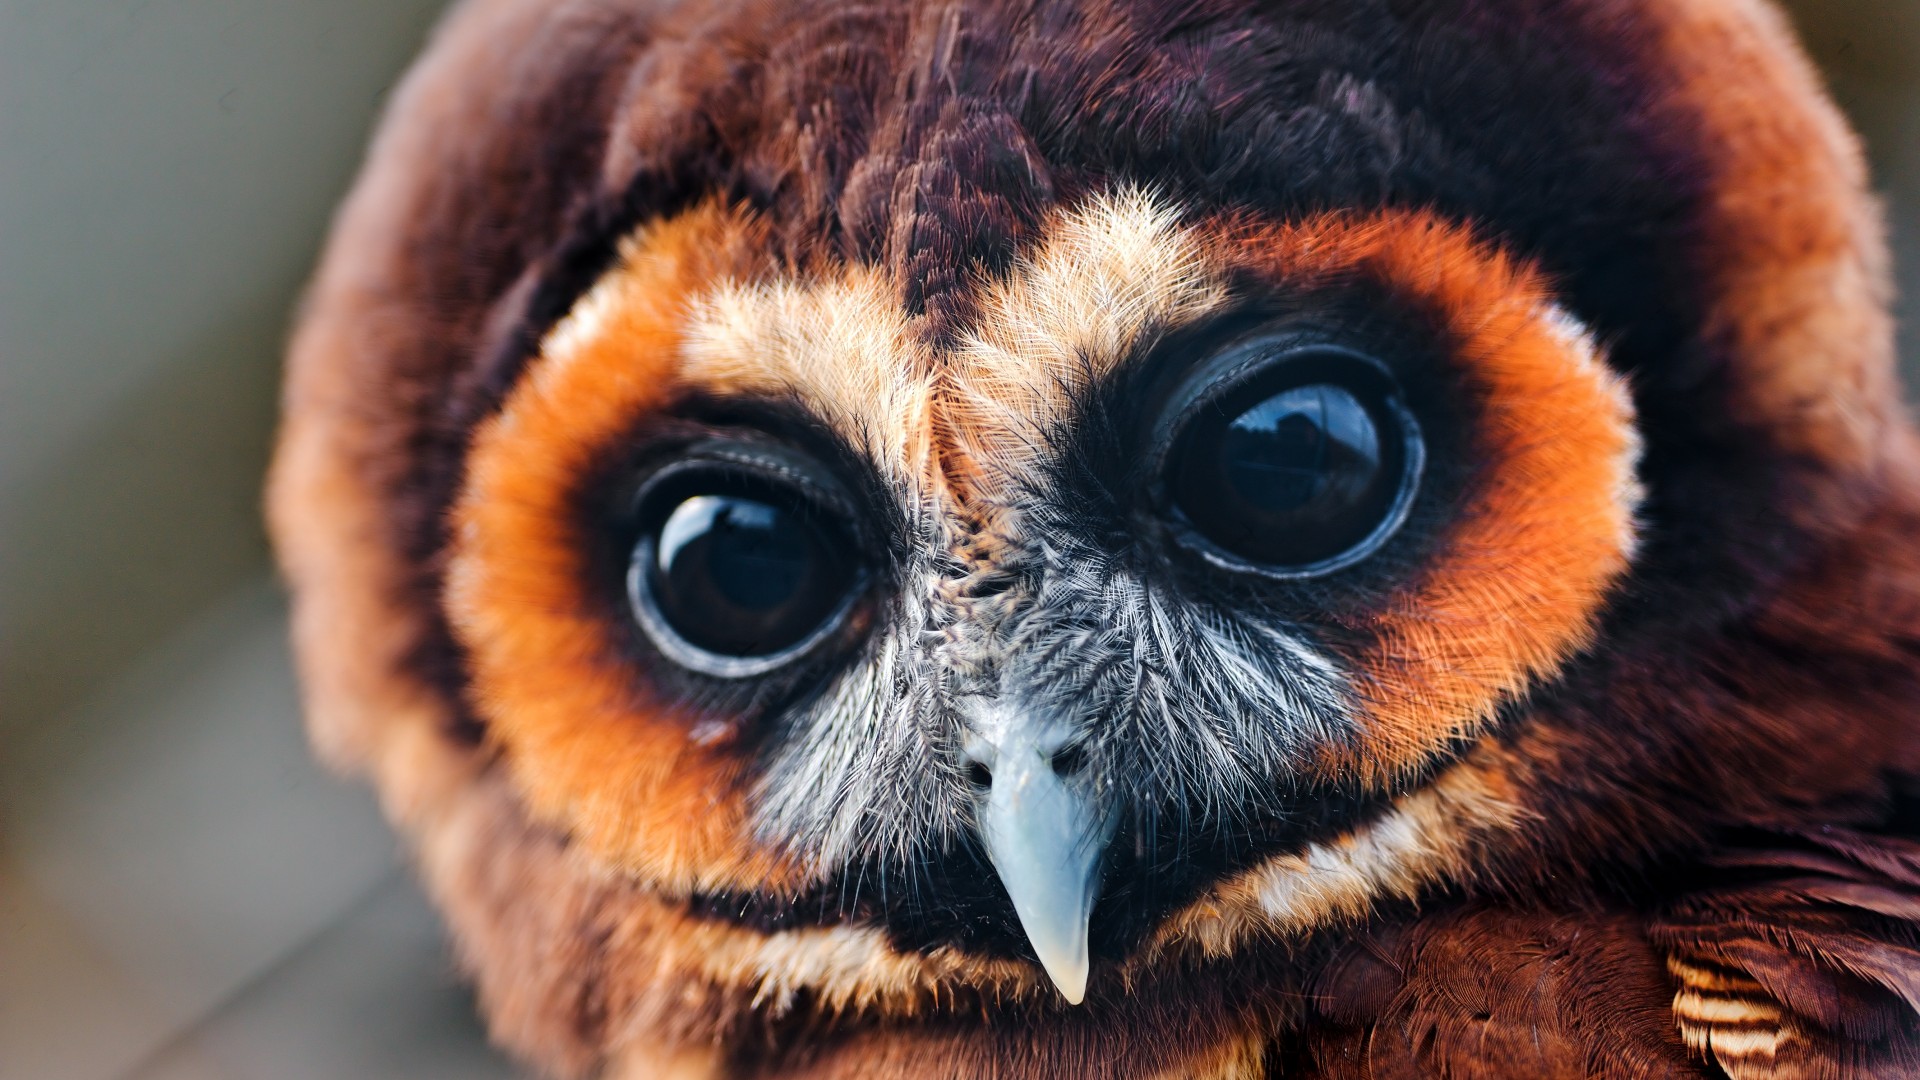 Owl, 5k, 4k wallpaper, National Geographic, Eyes, Wild, funny (horizontal)